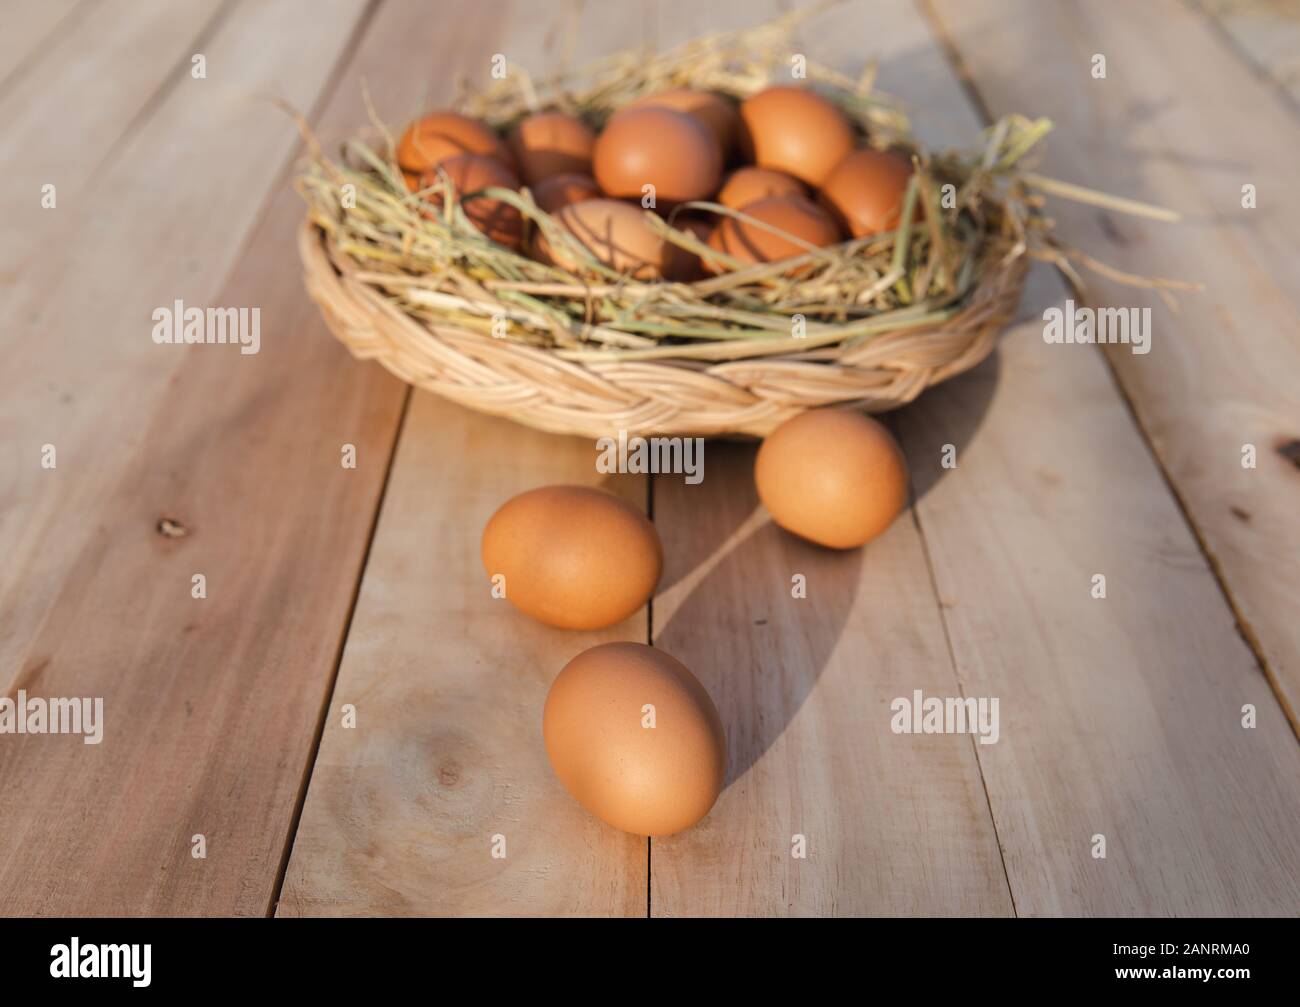 Egg basket on wooden floor Stock Photo